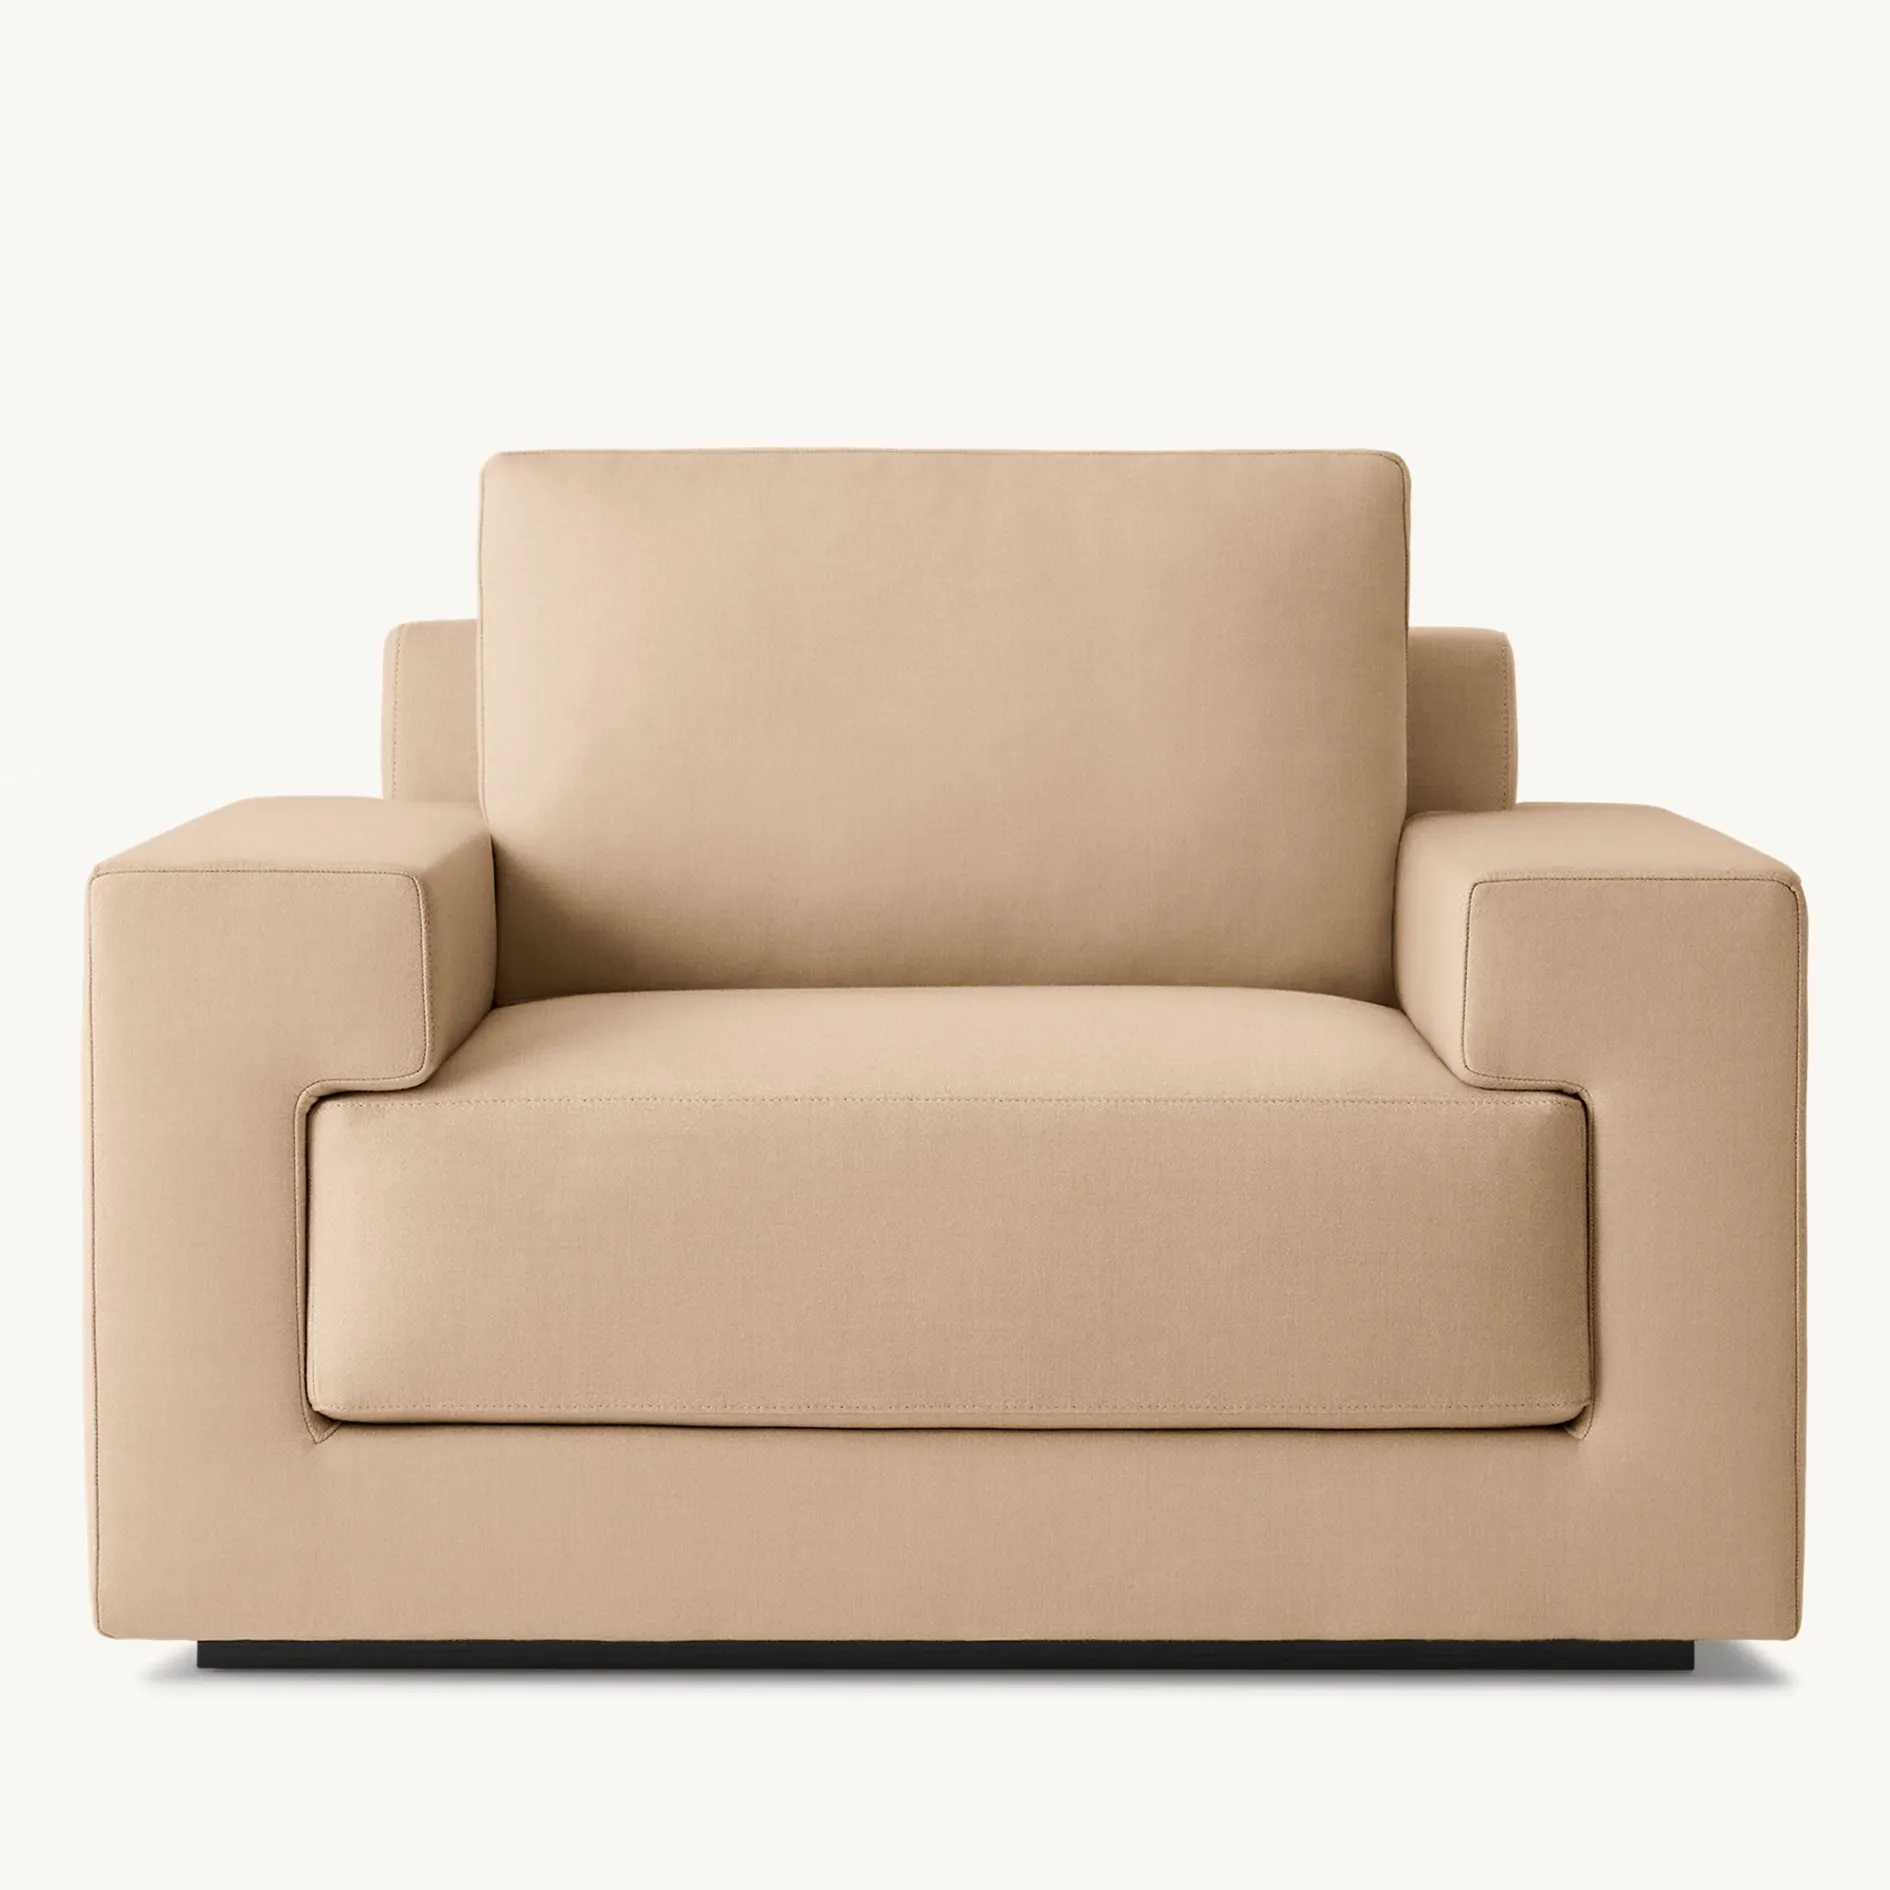 Fancy elegant luxury living room furniture comfy sculptural geometric form single sofa chair design